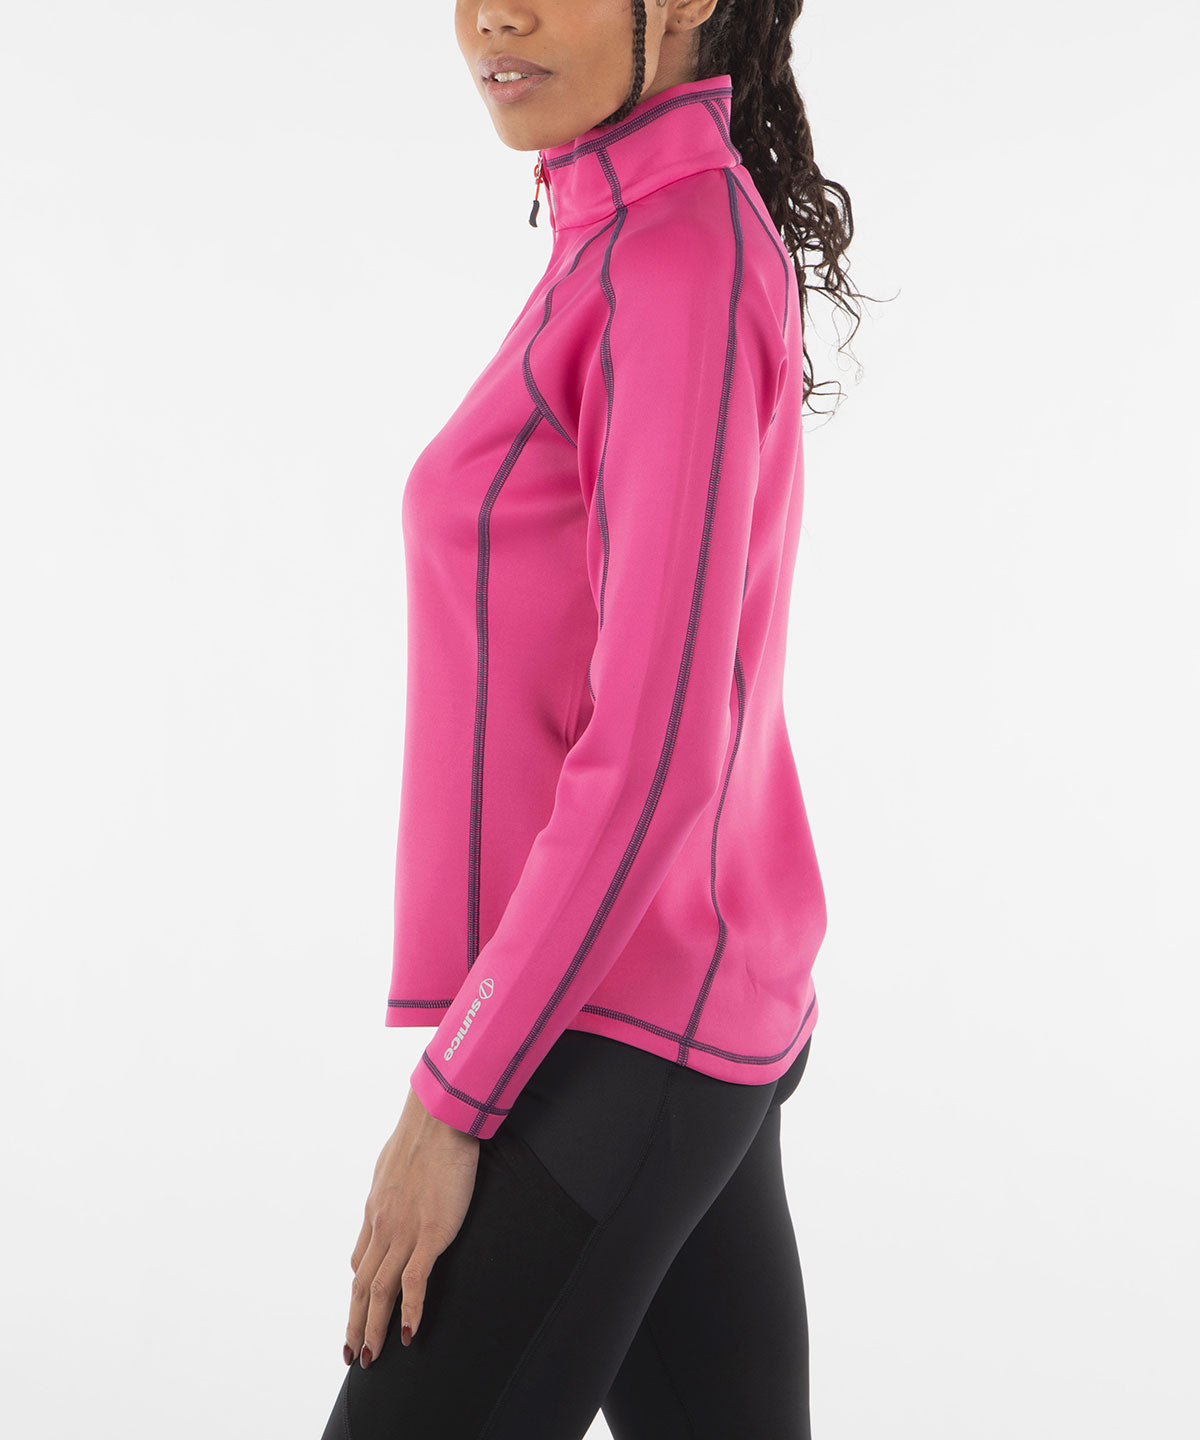 Sunice Women's Maddy Lightweight Stretch Thermal Half-Zip Pullover